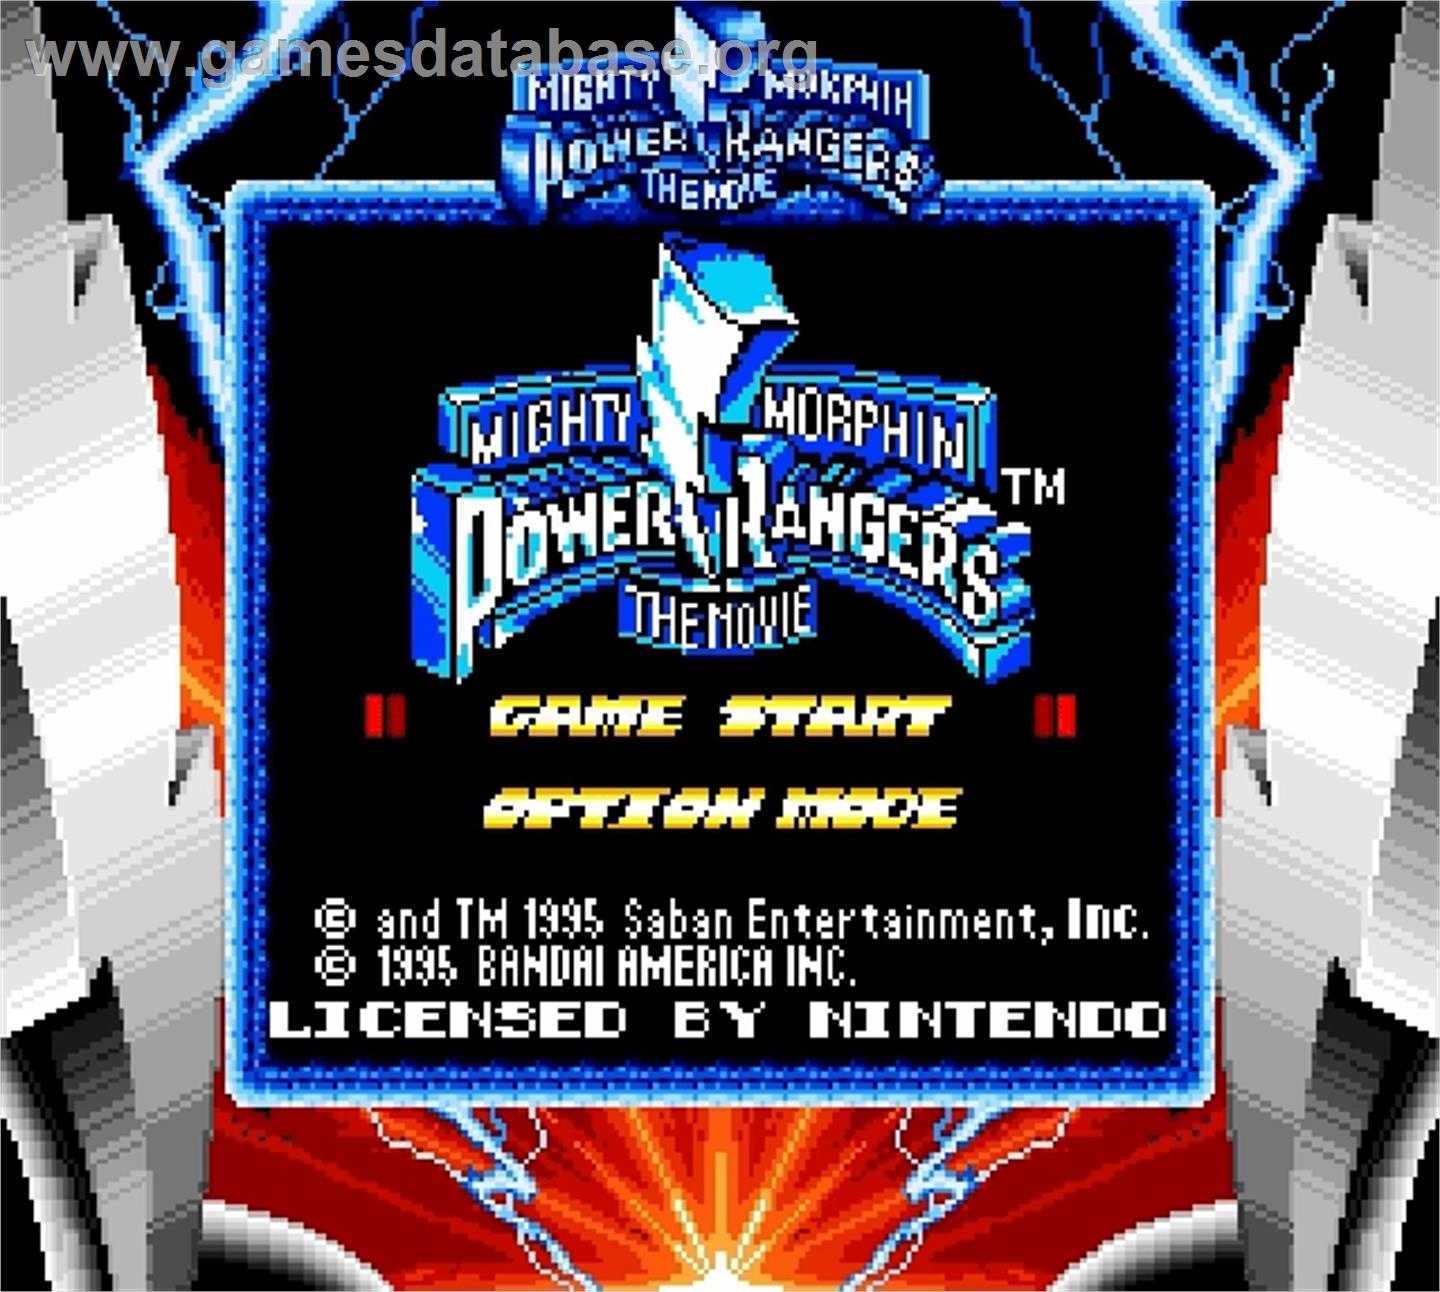 Mighty Morphin Power Rangers - The Movie - Nintendo Super Gameboy - Artwork - Title Screen